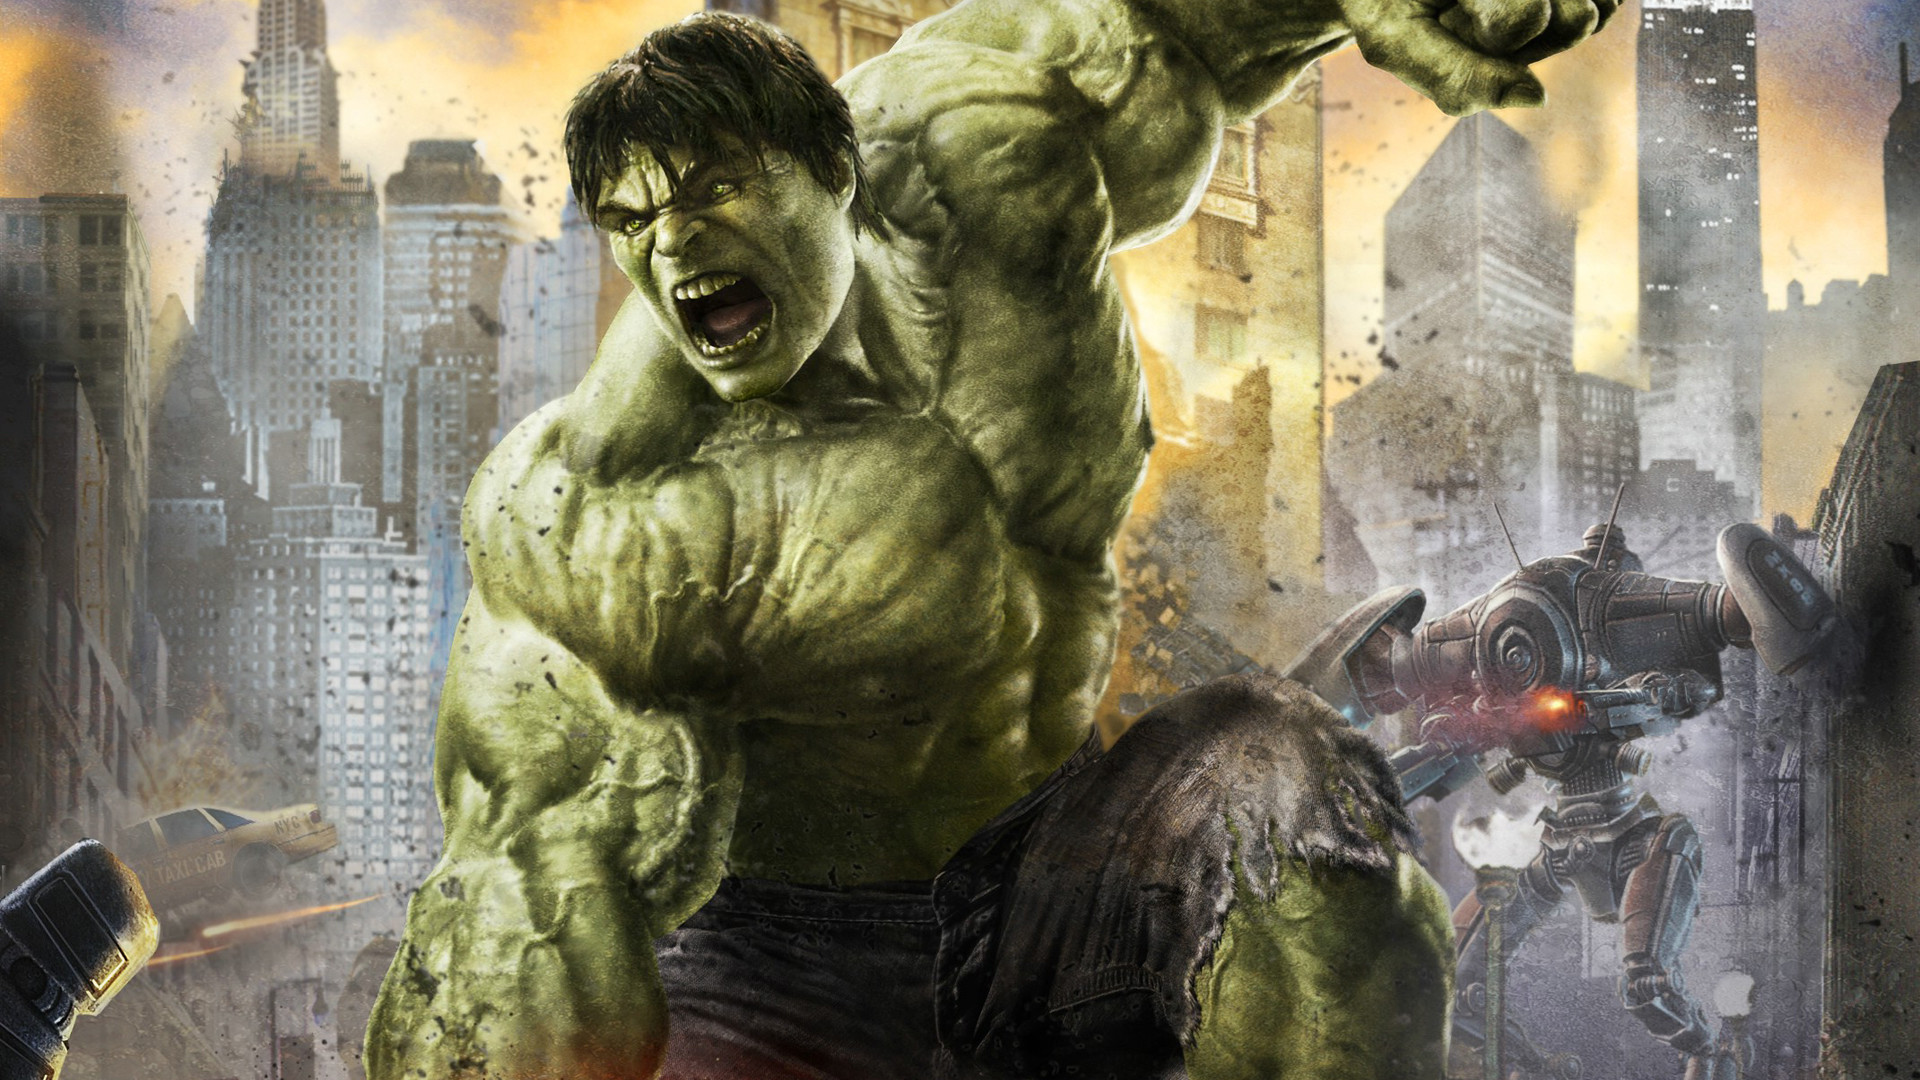 Downlad Amazing Hulk Desktop Background Free 1.